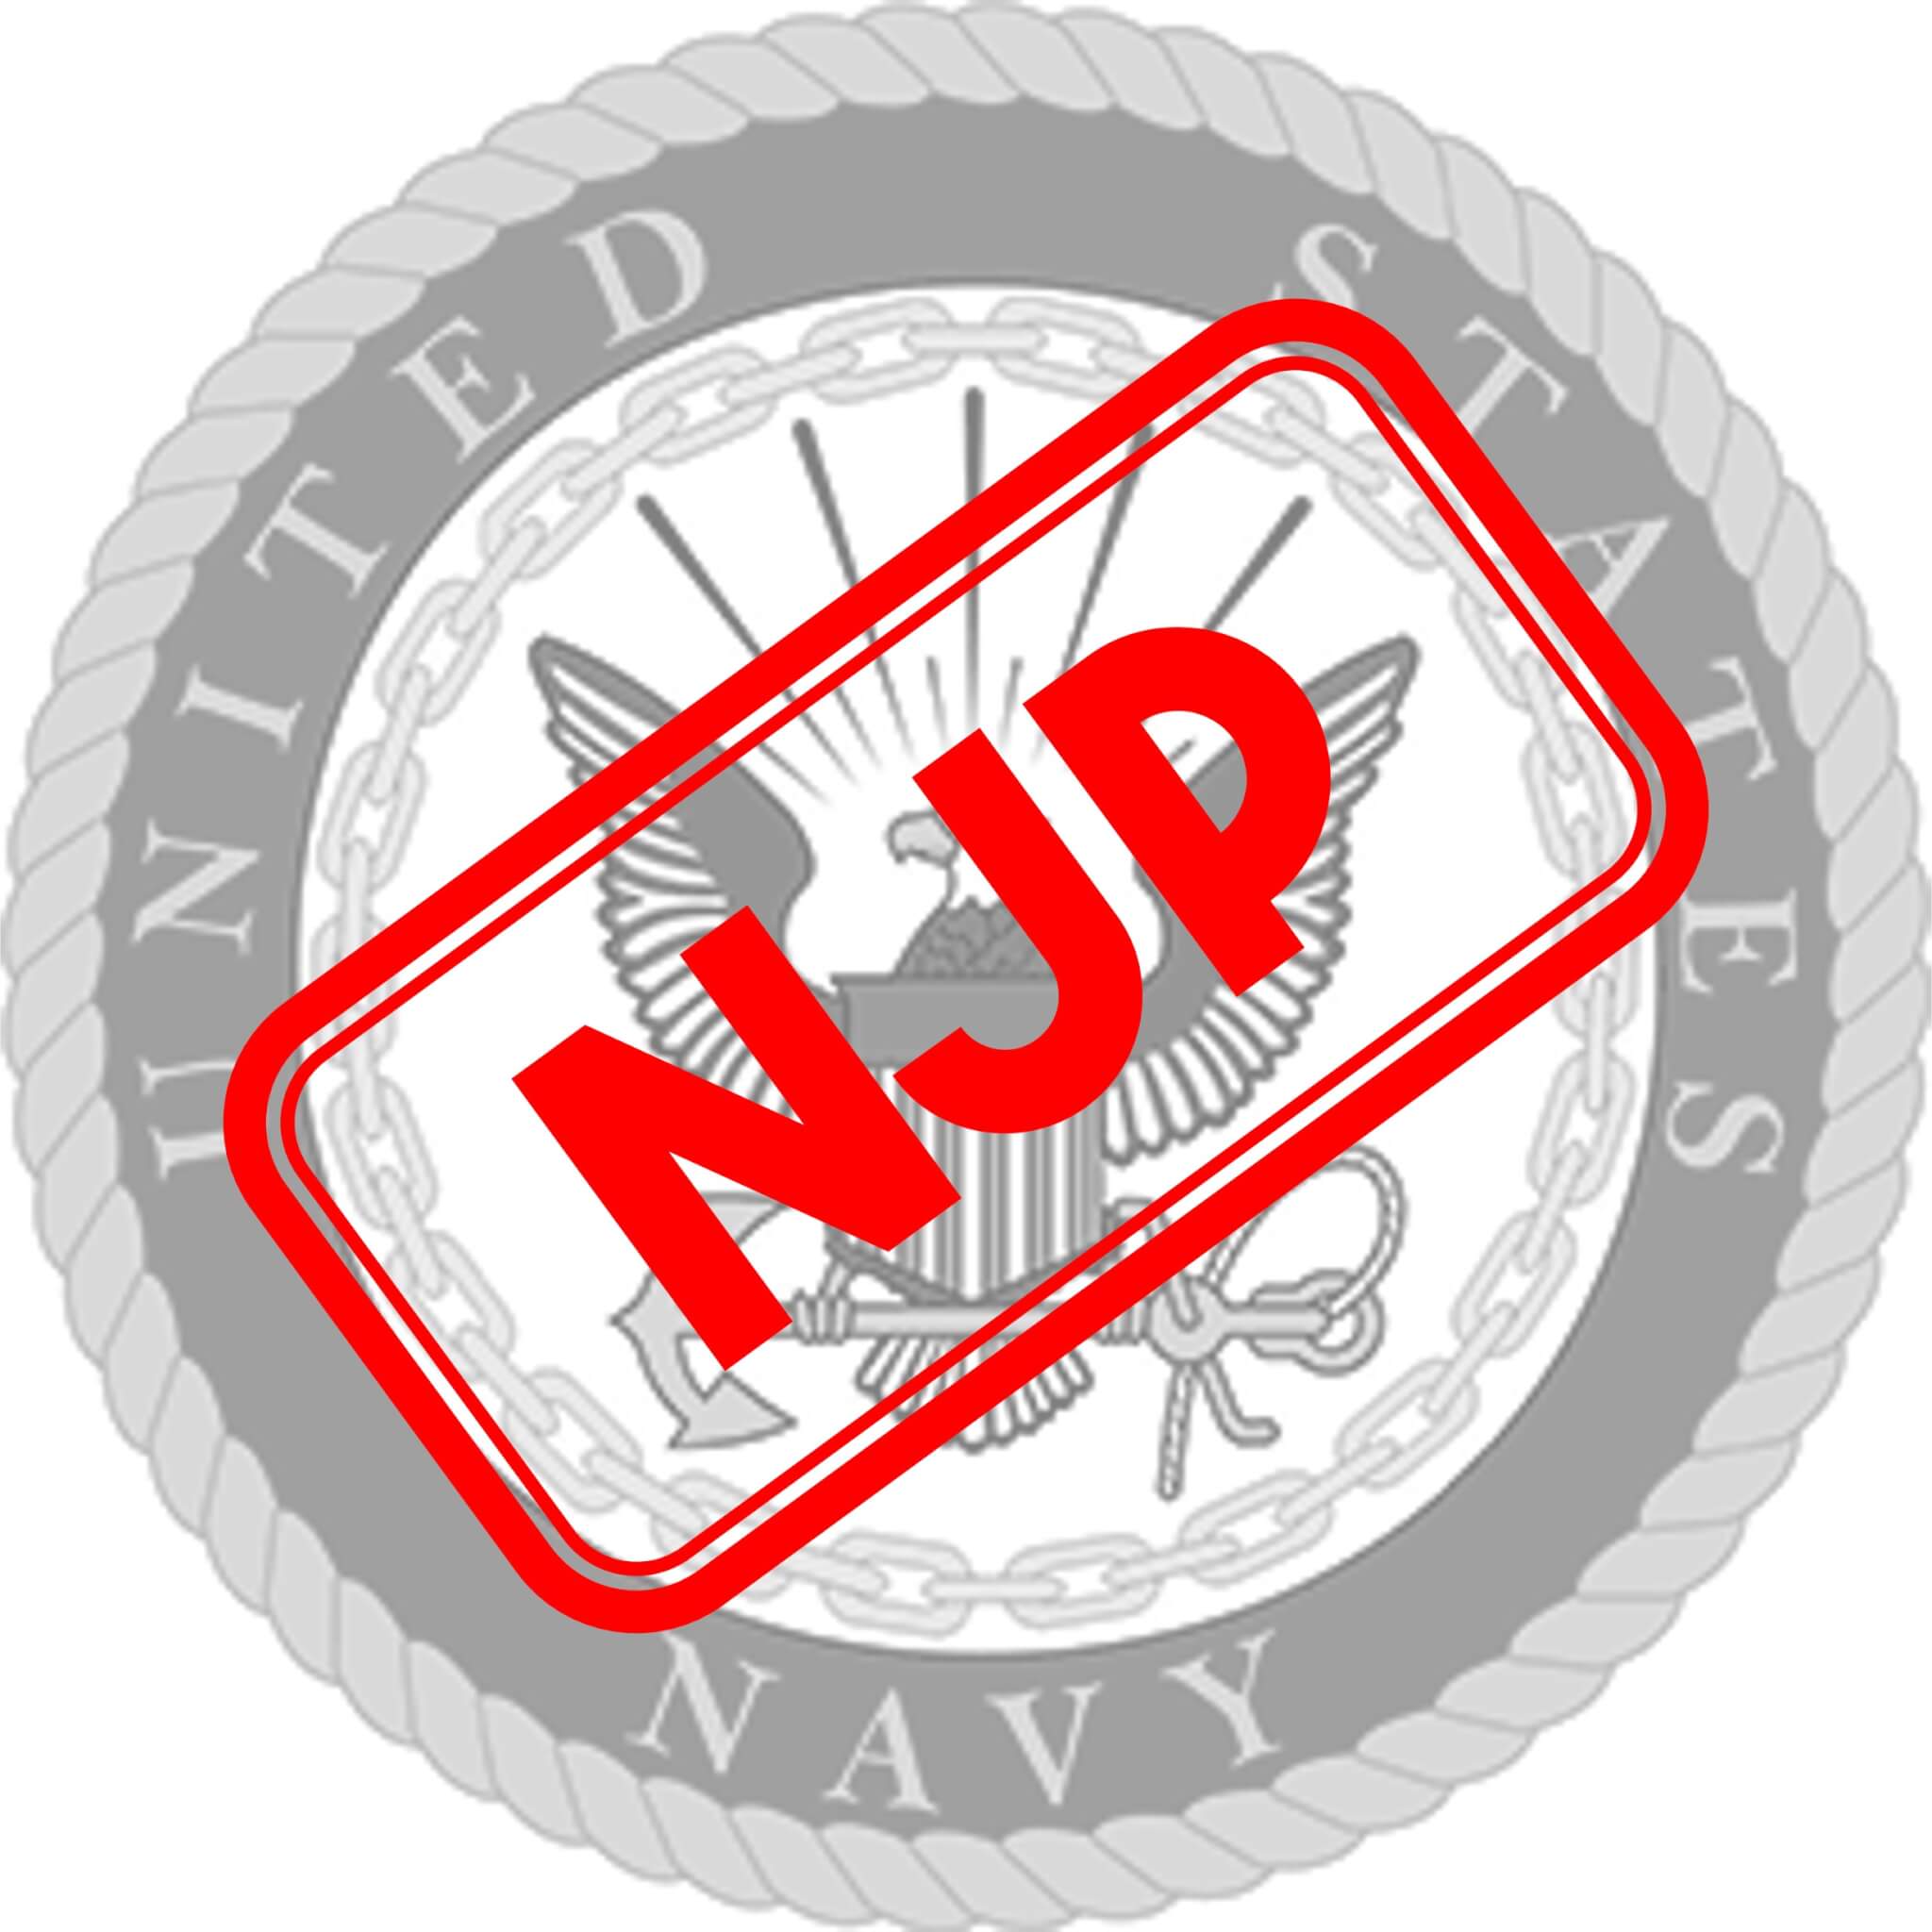 Navy NJP Response Template